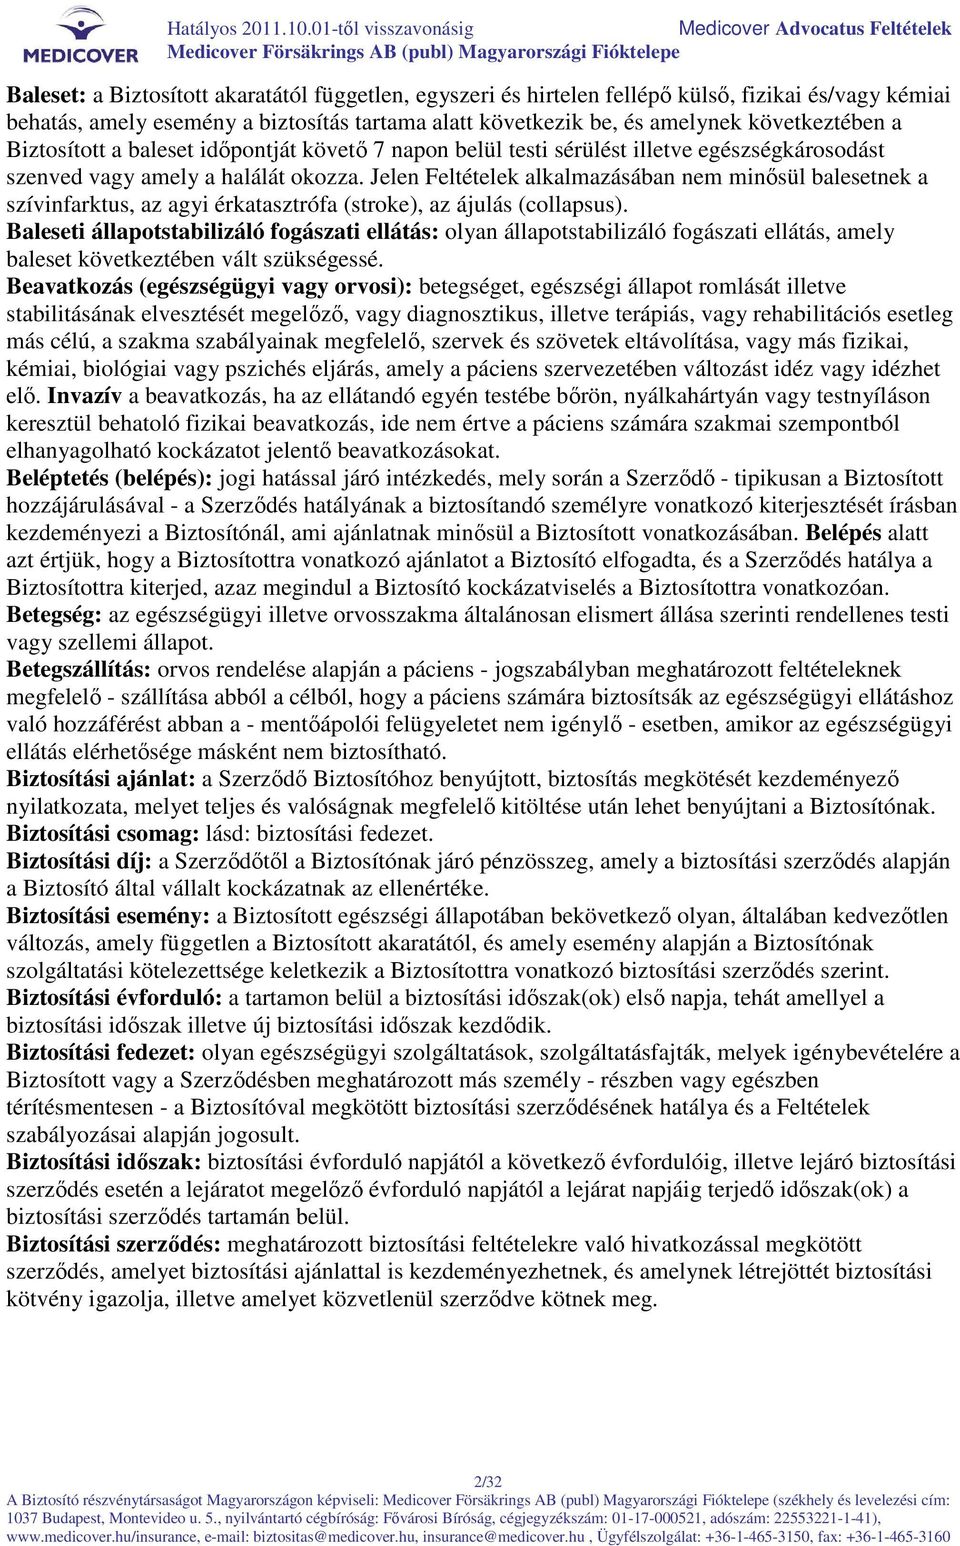 Medicover Försäkrings AB (publ) Magyarországi Fióktelepe - PDF Free Download